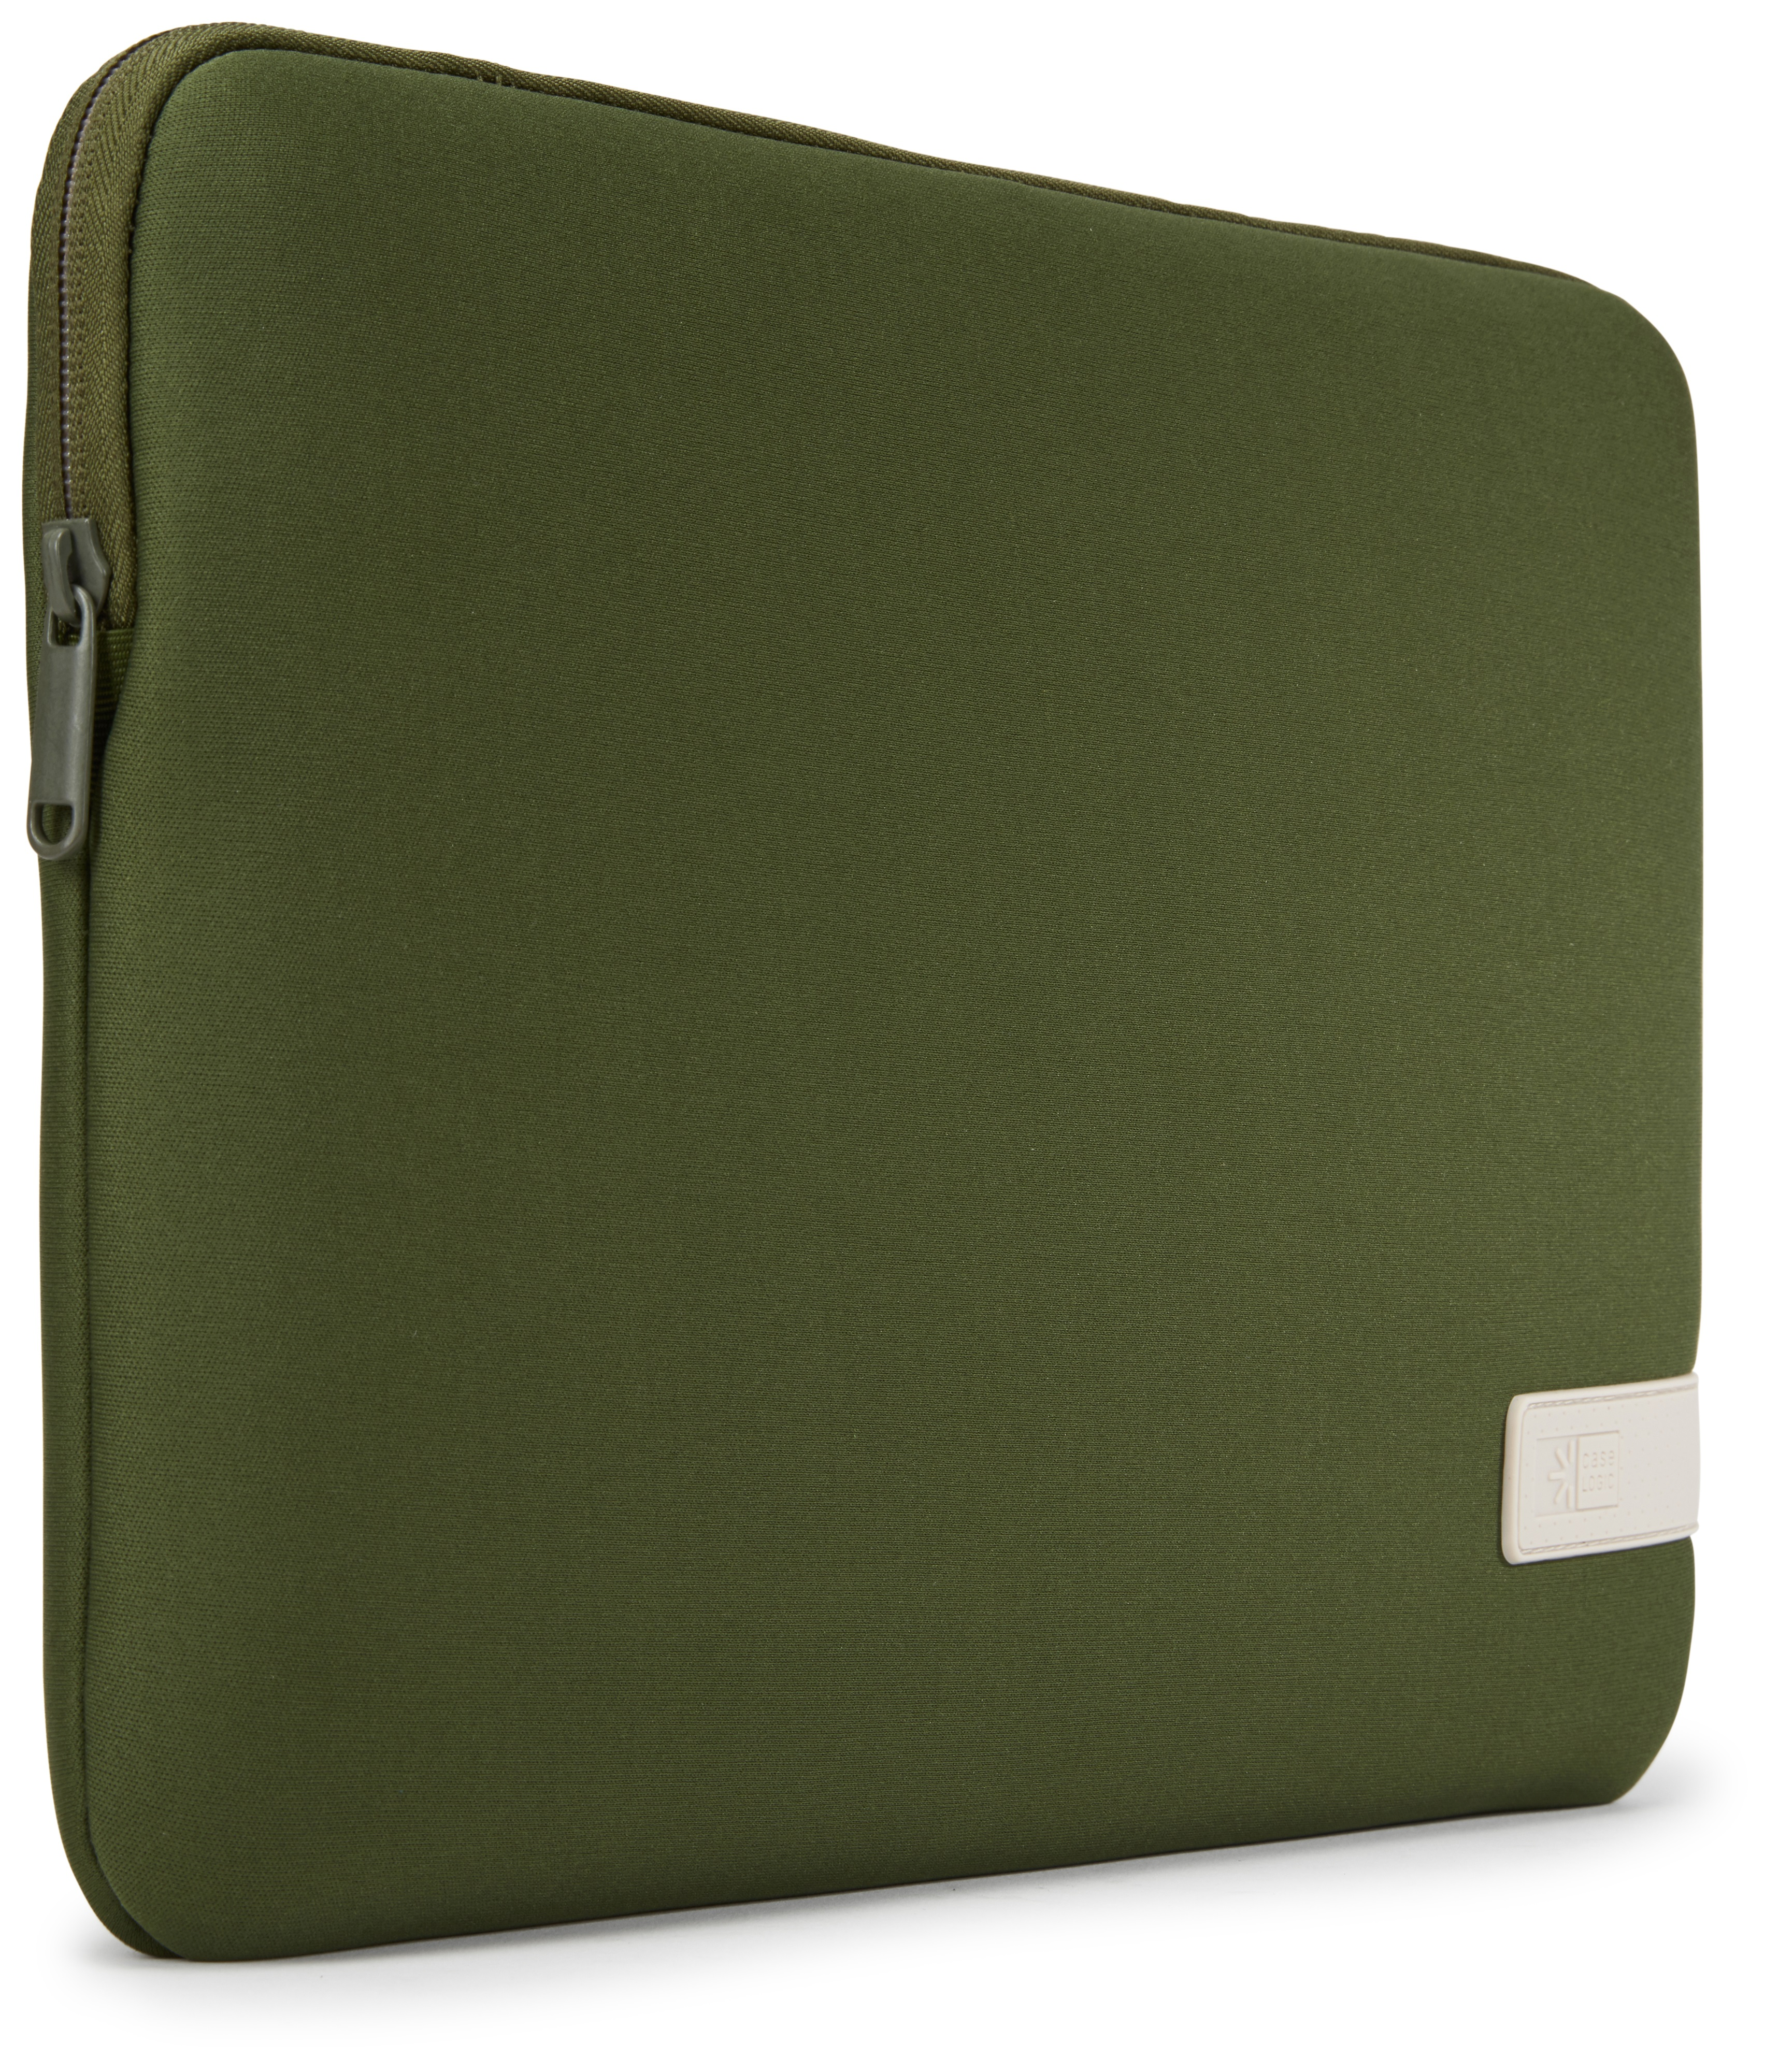 für Polyester, Universal Notebooksleeve Grün Reflect CASE LOGIC Sleeve